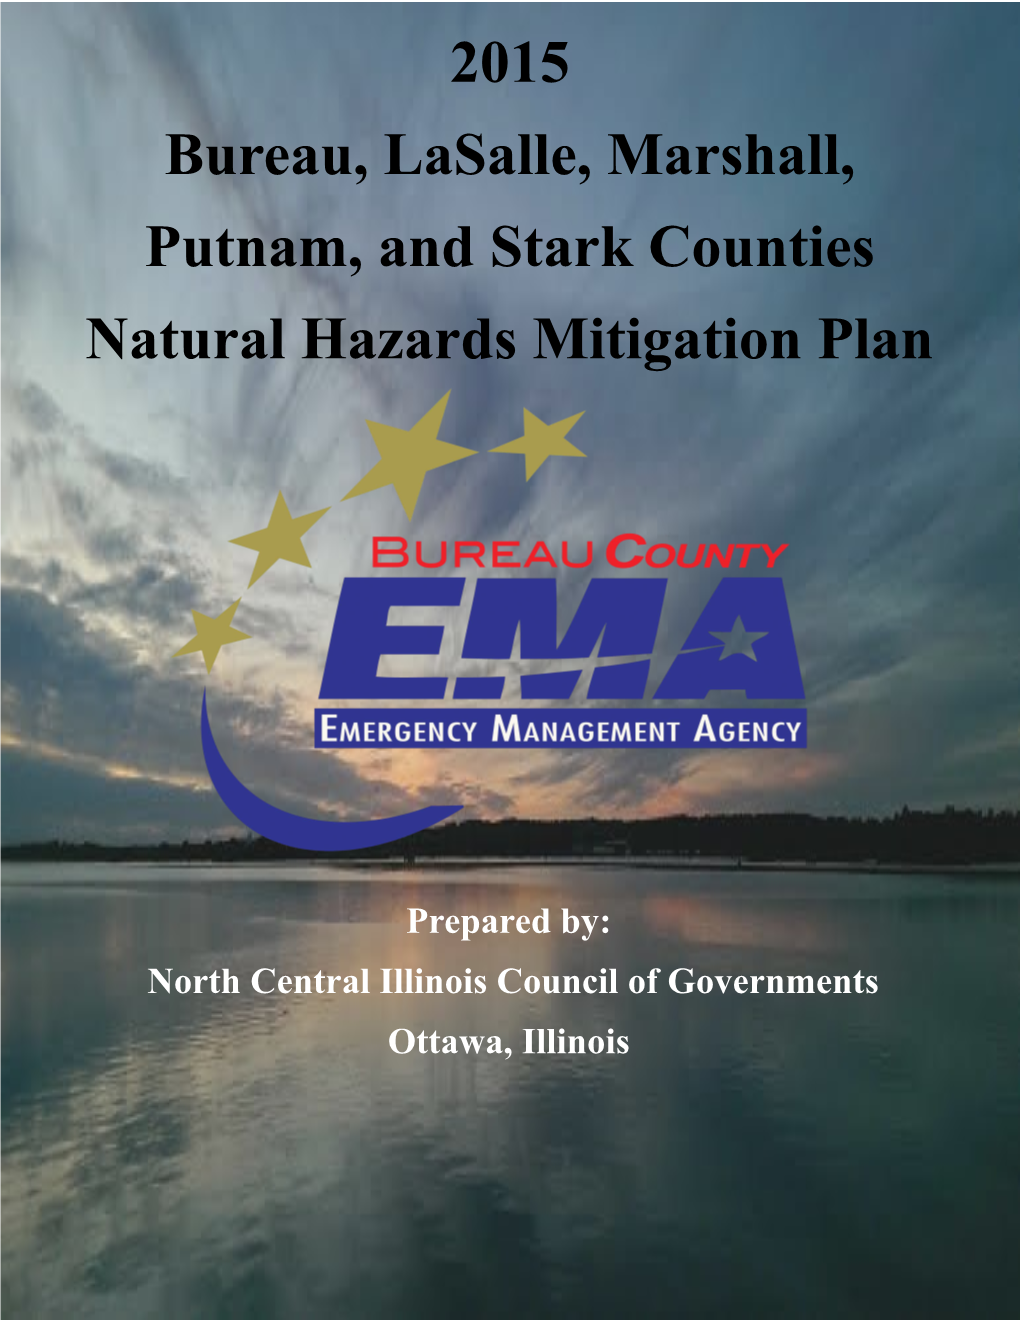 2015 Bureau, Lasalle, Marshall, Putnam, and Stark Counties Natural Hazards Mitigation Plan